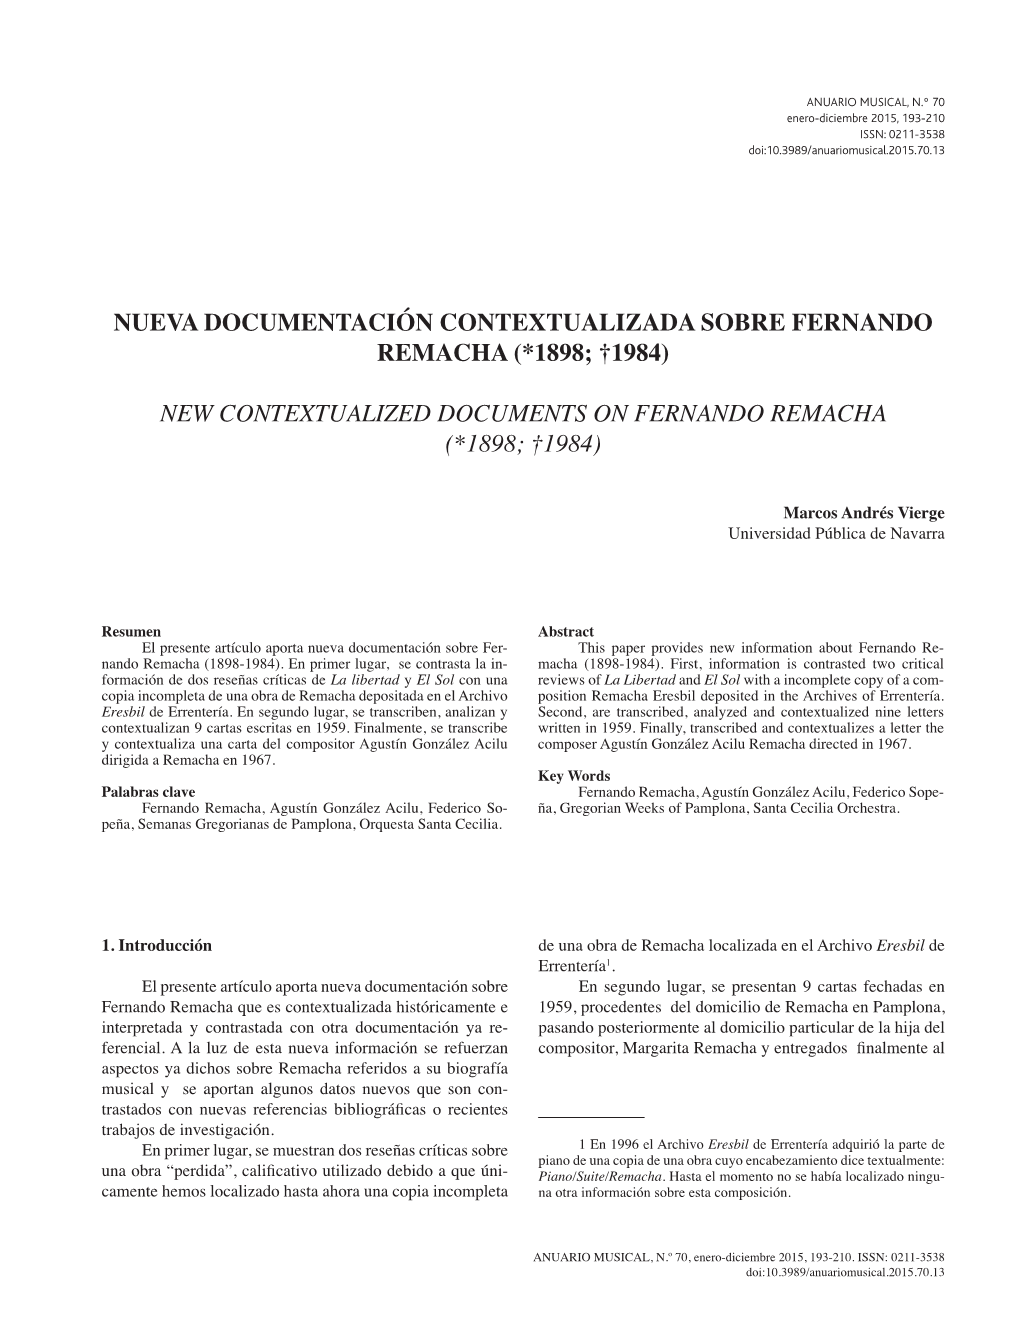 New Contextualized Documents on Fernando Remacha (*1898; †1984)